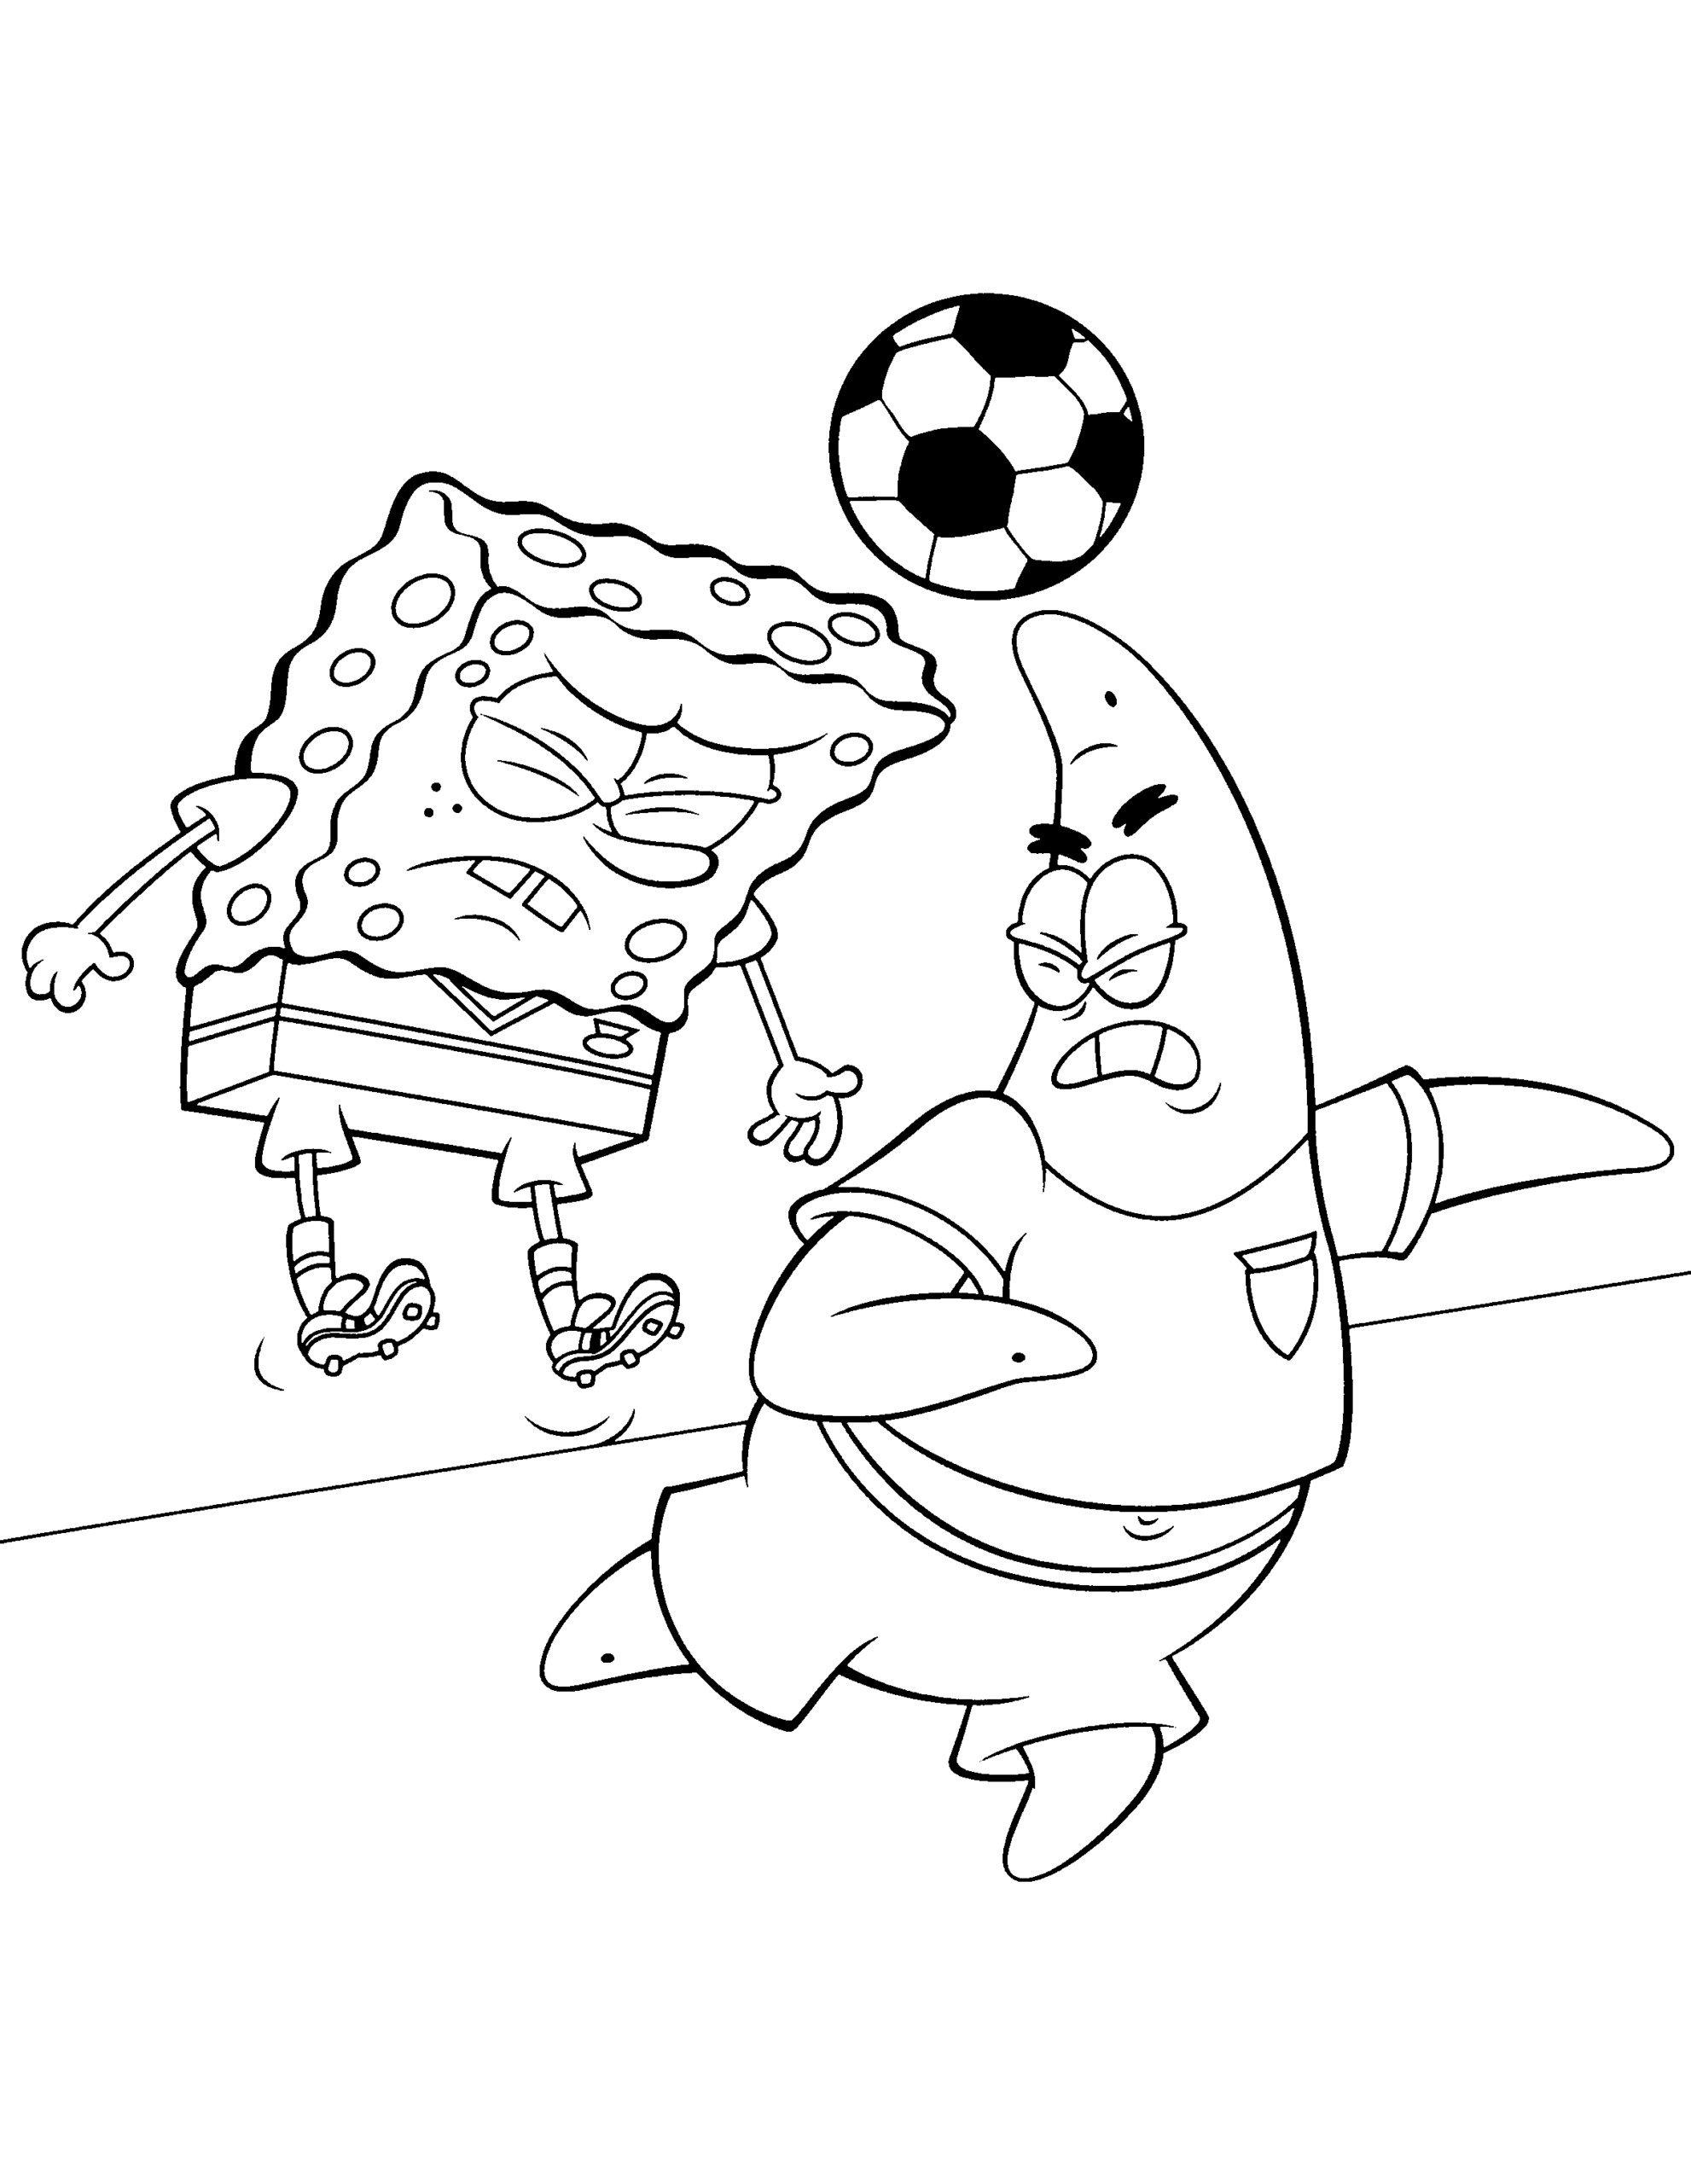 SpongeBob SquarePants Coloring Pages Cartoons spongebob schwammkopf VRJPp Printable 2020 6041 Coloring4free